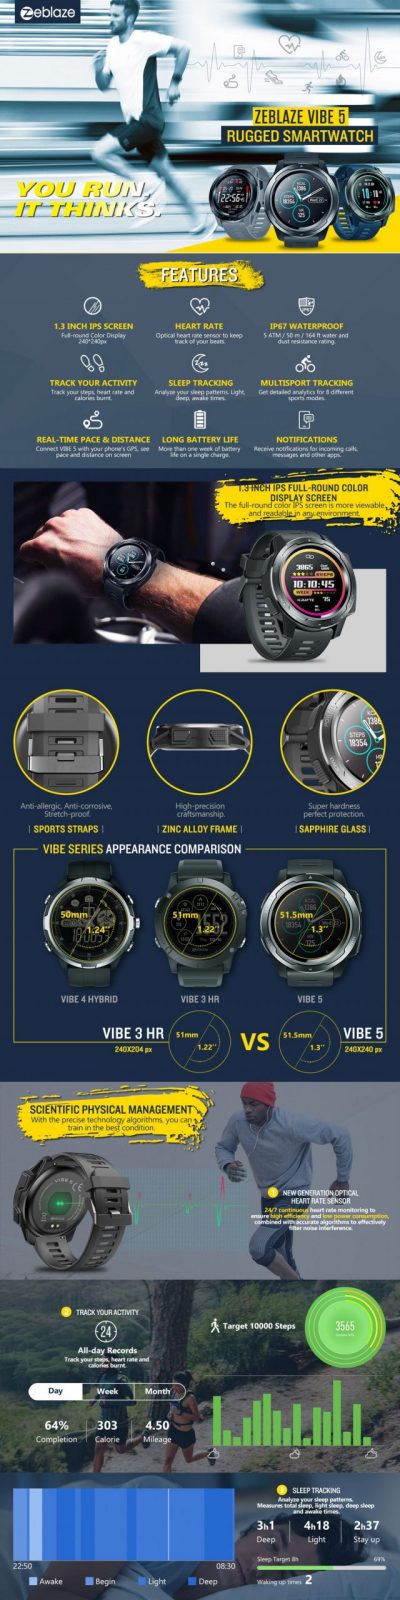 Zeblaze Vibe 5 Smartwatch (1)